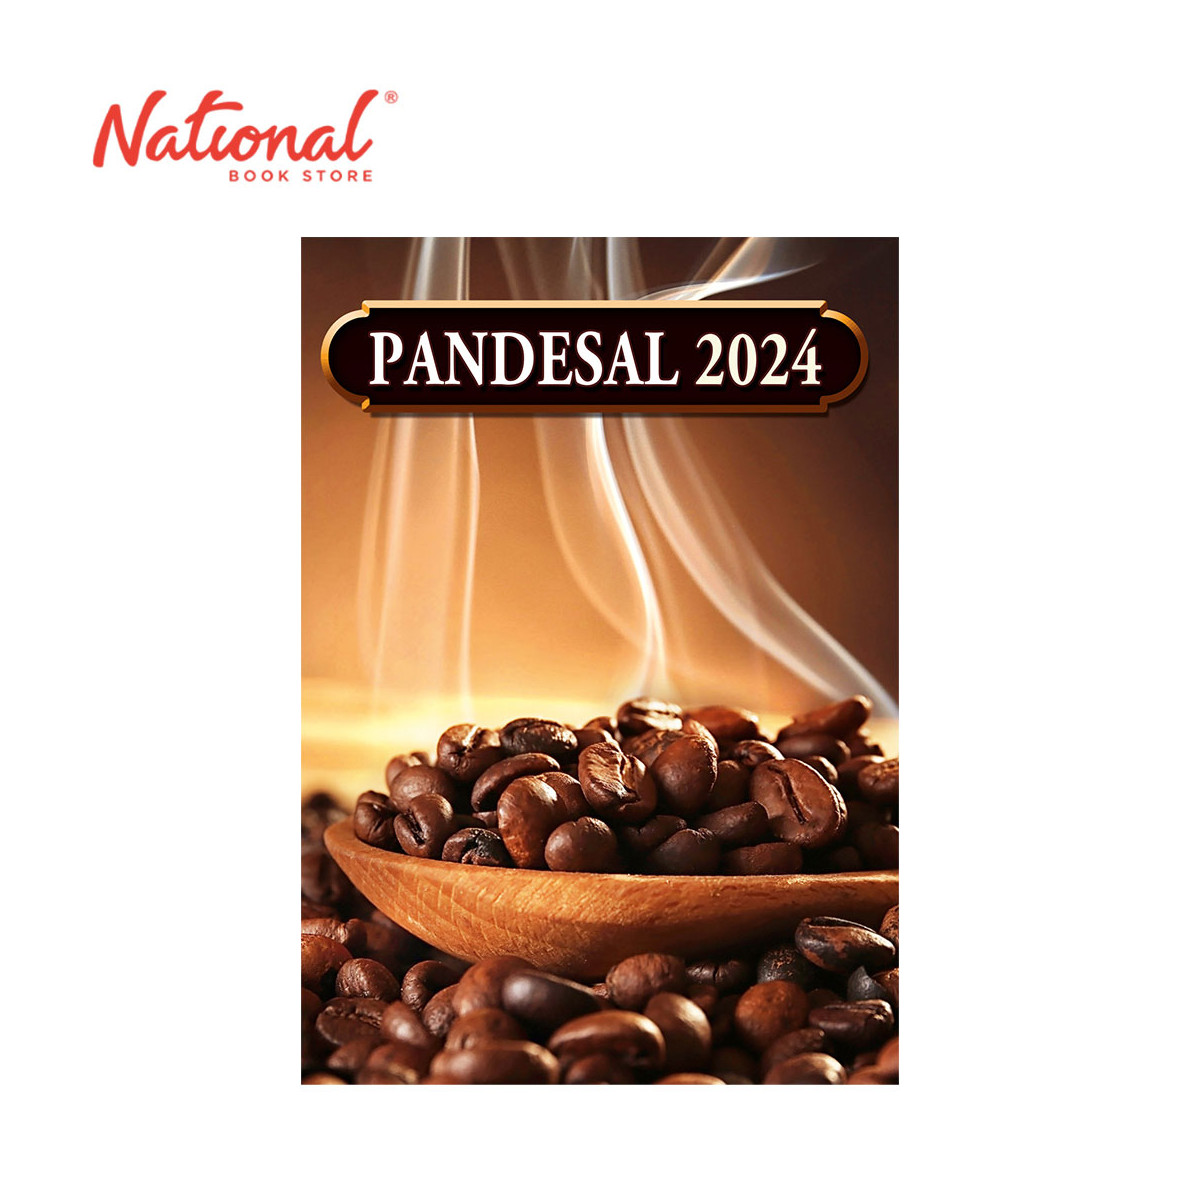 Pandesal 2024 - Trade Paperback - Prayers & Devotionals